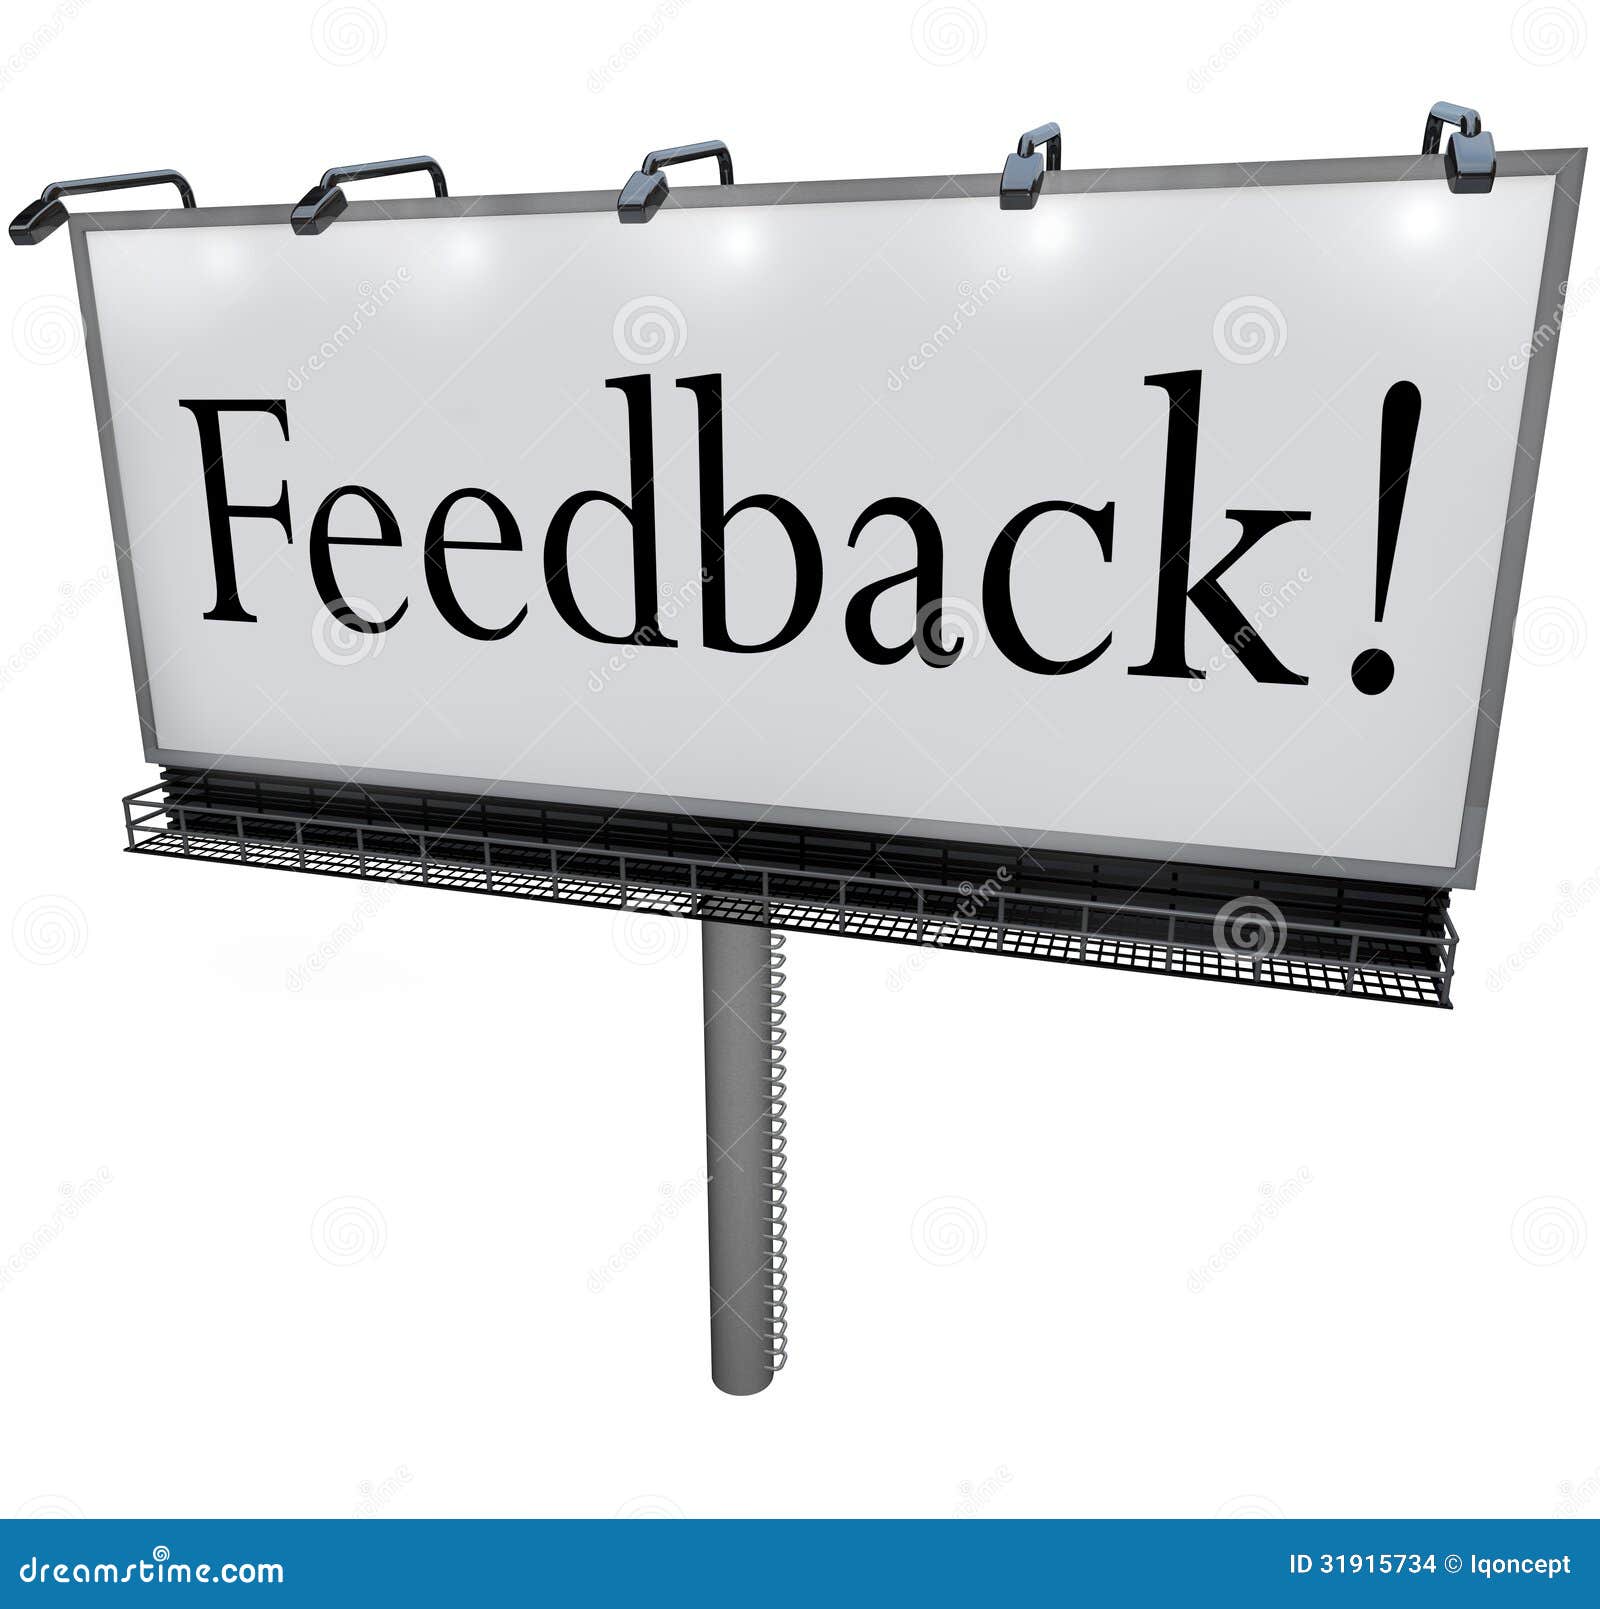 feedback word on billboard seeking opinions comments input